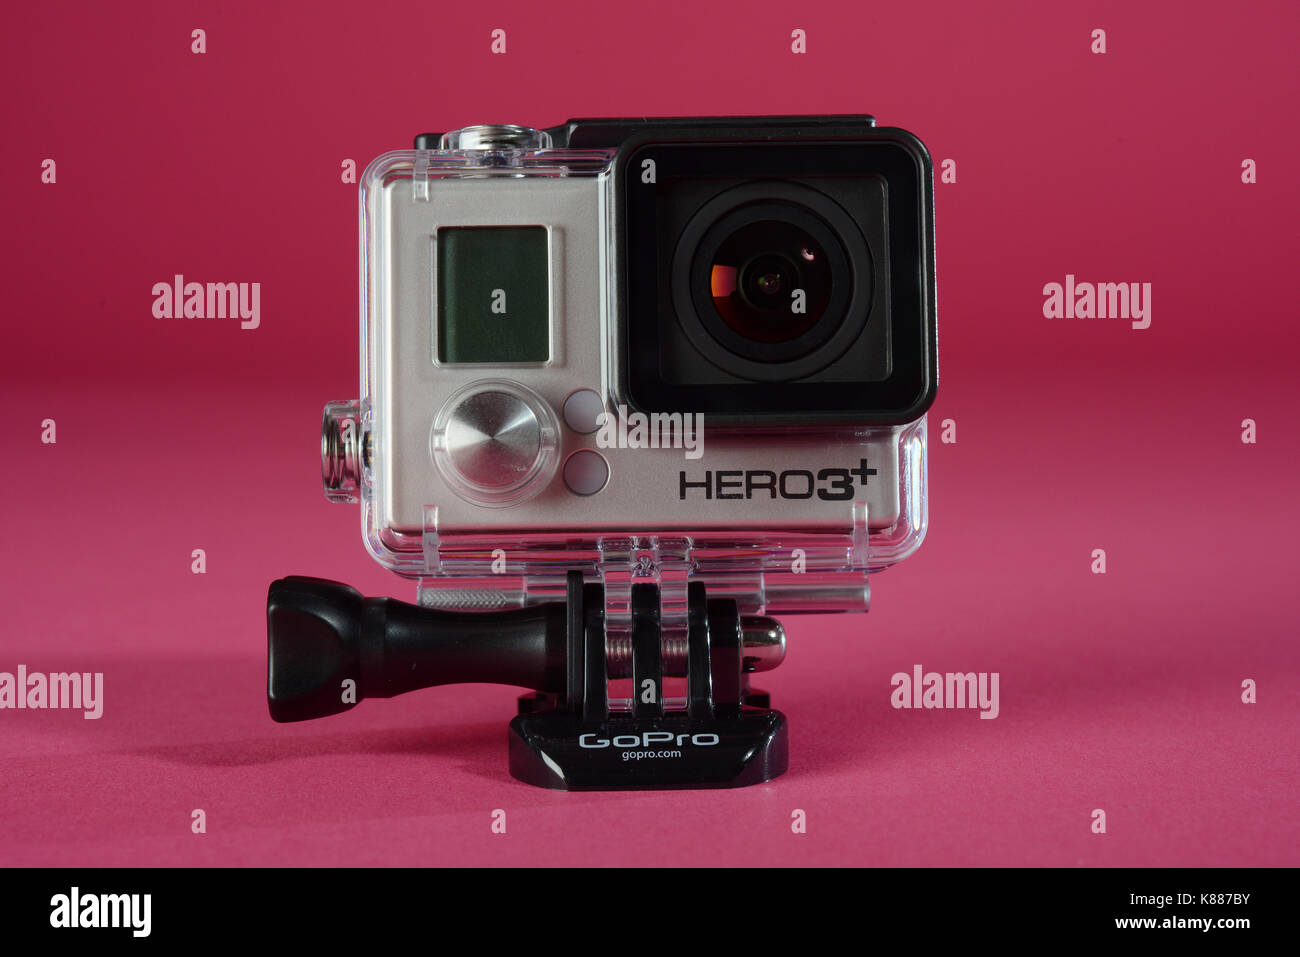 GoPro Hero 3 plus video camera Stock Photo - Alamy